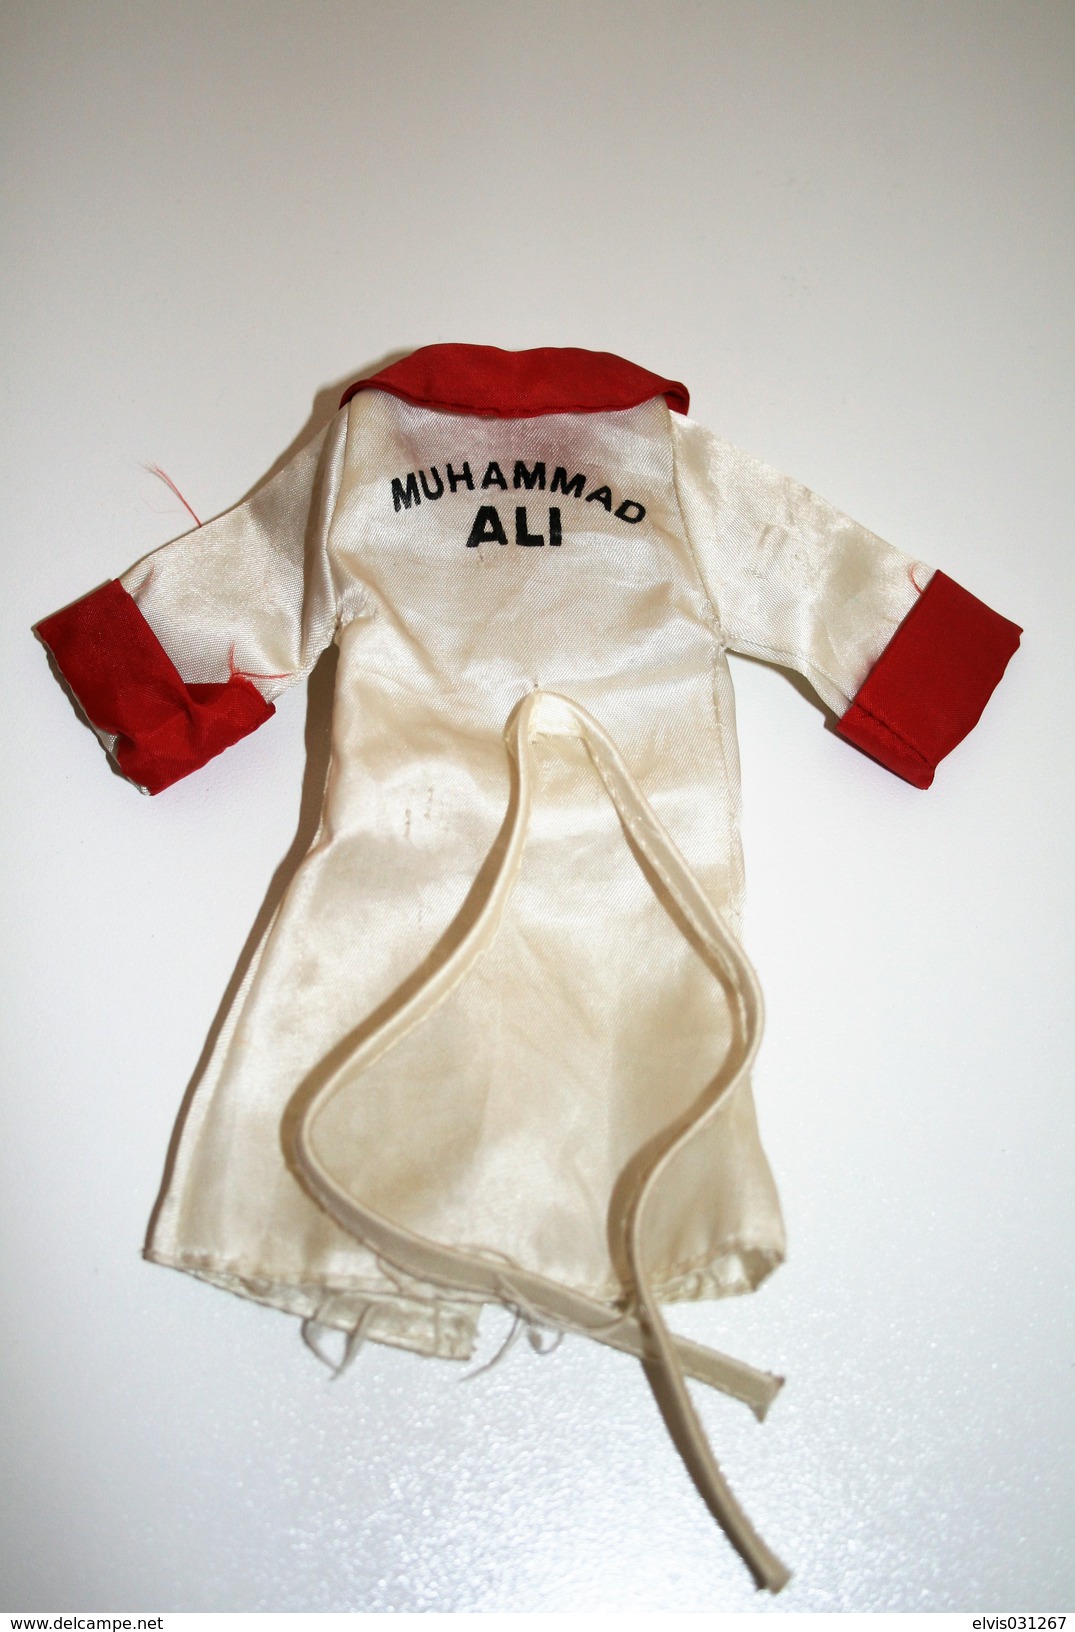 Vintage MEGO - PERSONALITIES PARTS - Jacket Boxing Robe Clothes MUHAMMAD ALI - Mego 1976 - Action Man - Action Man